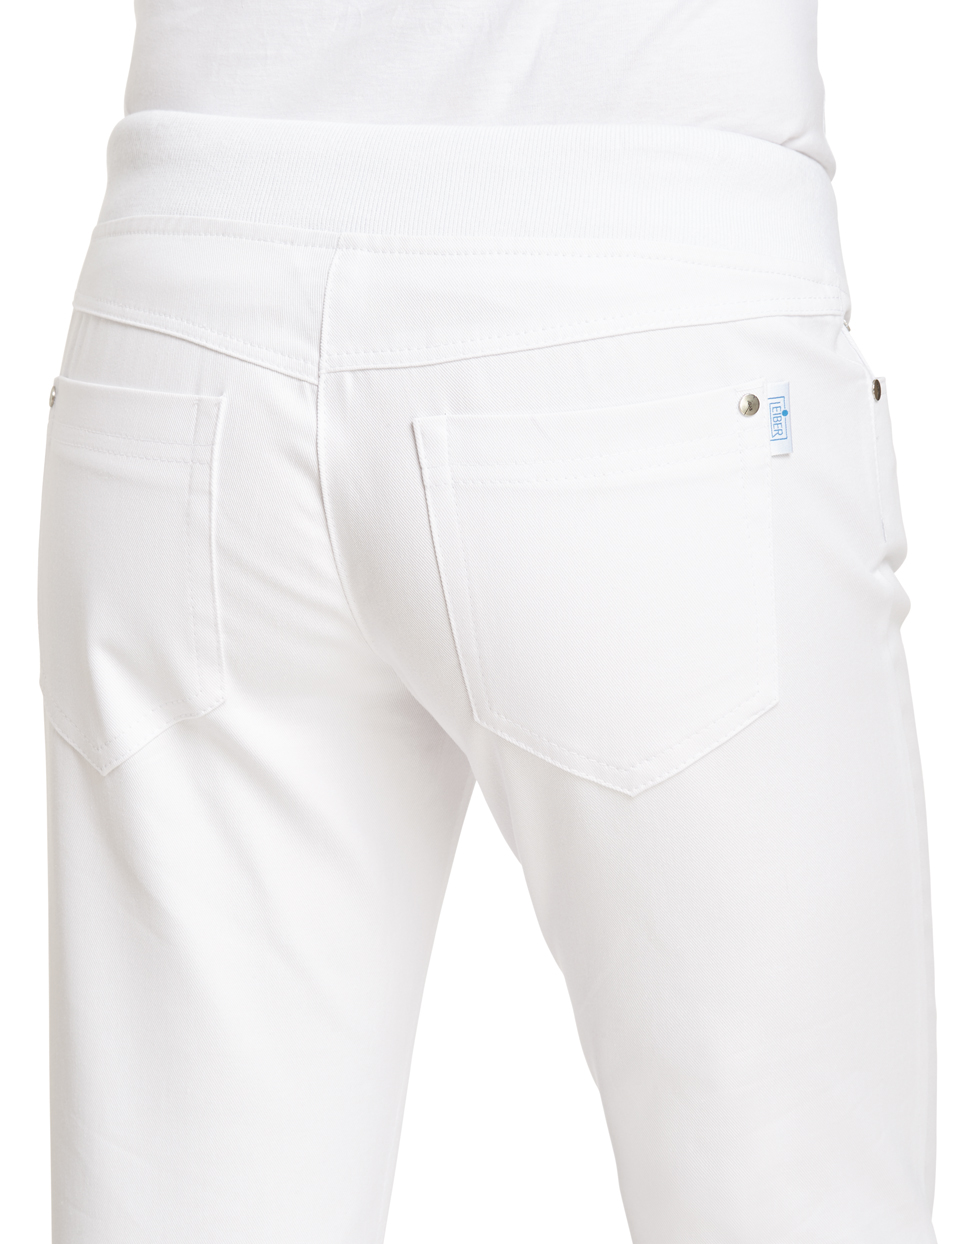 Damen Jeans Stretch weiß Modell 6830/6831/6832